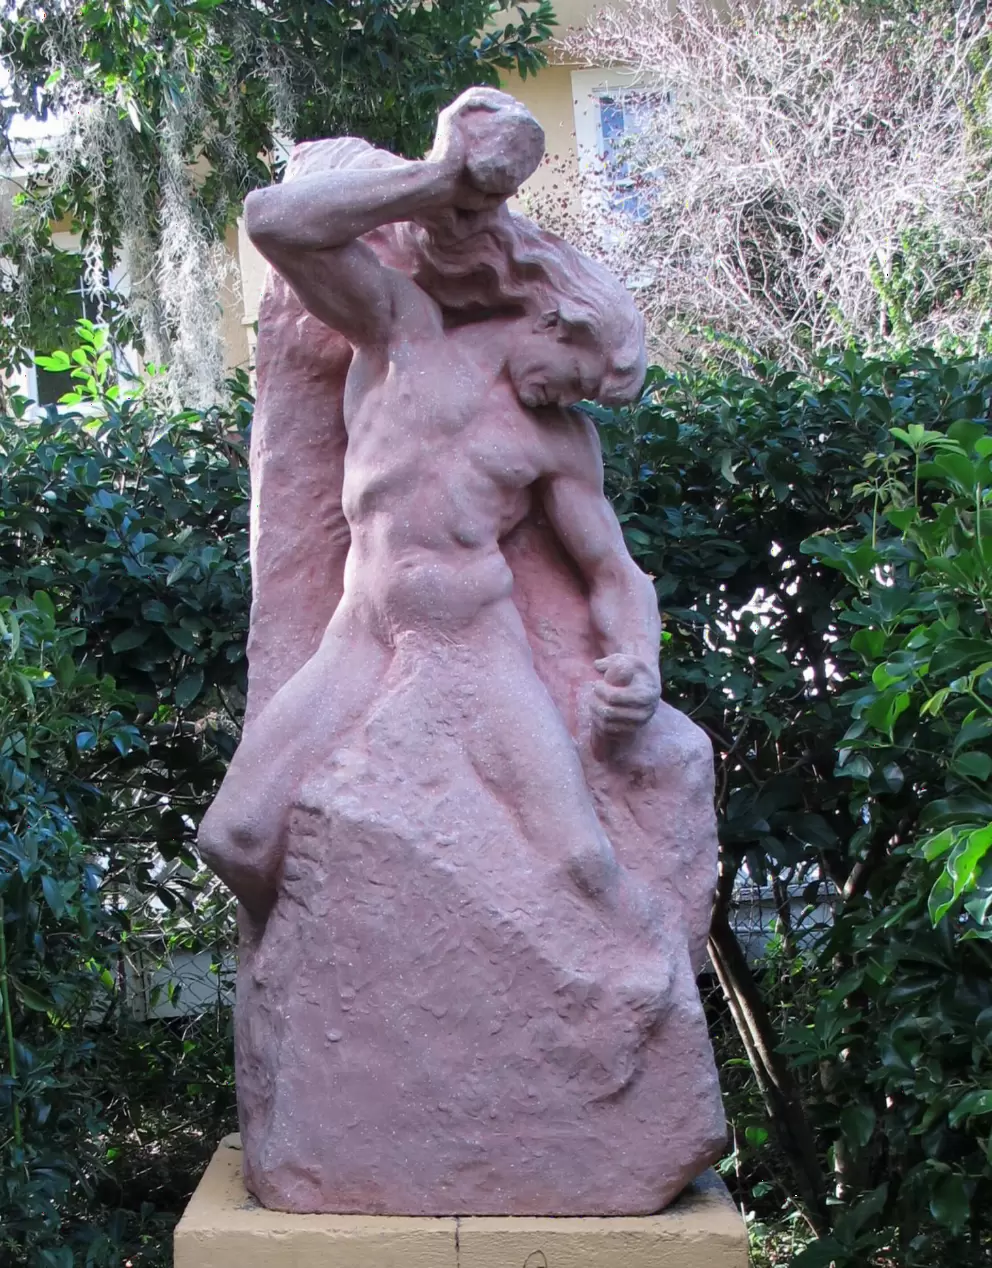 Albin Polasek Sculpture Gardens, Winter Park